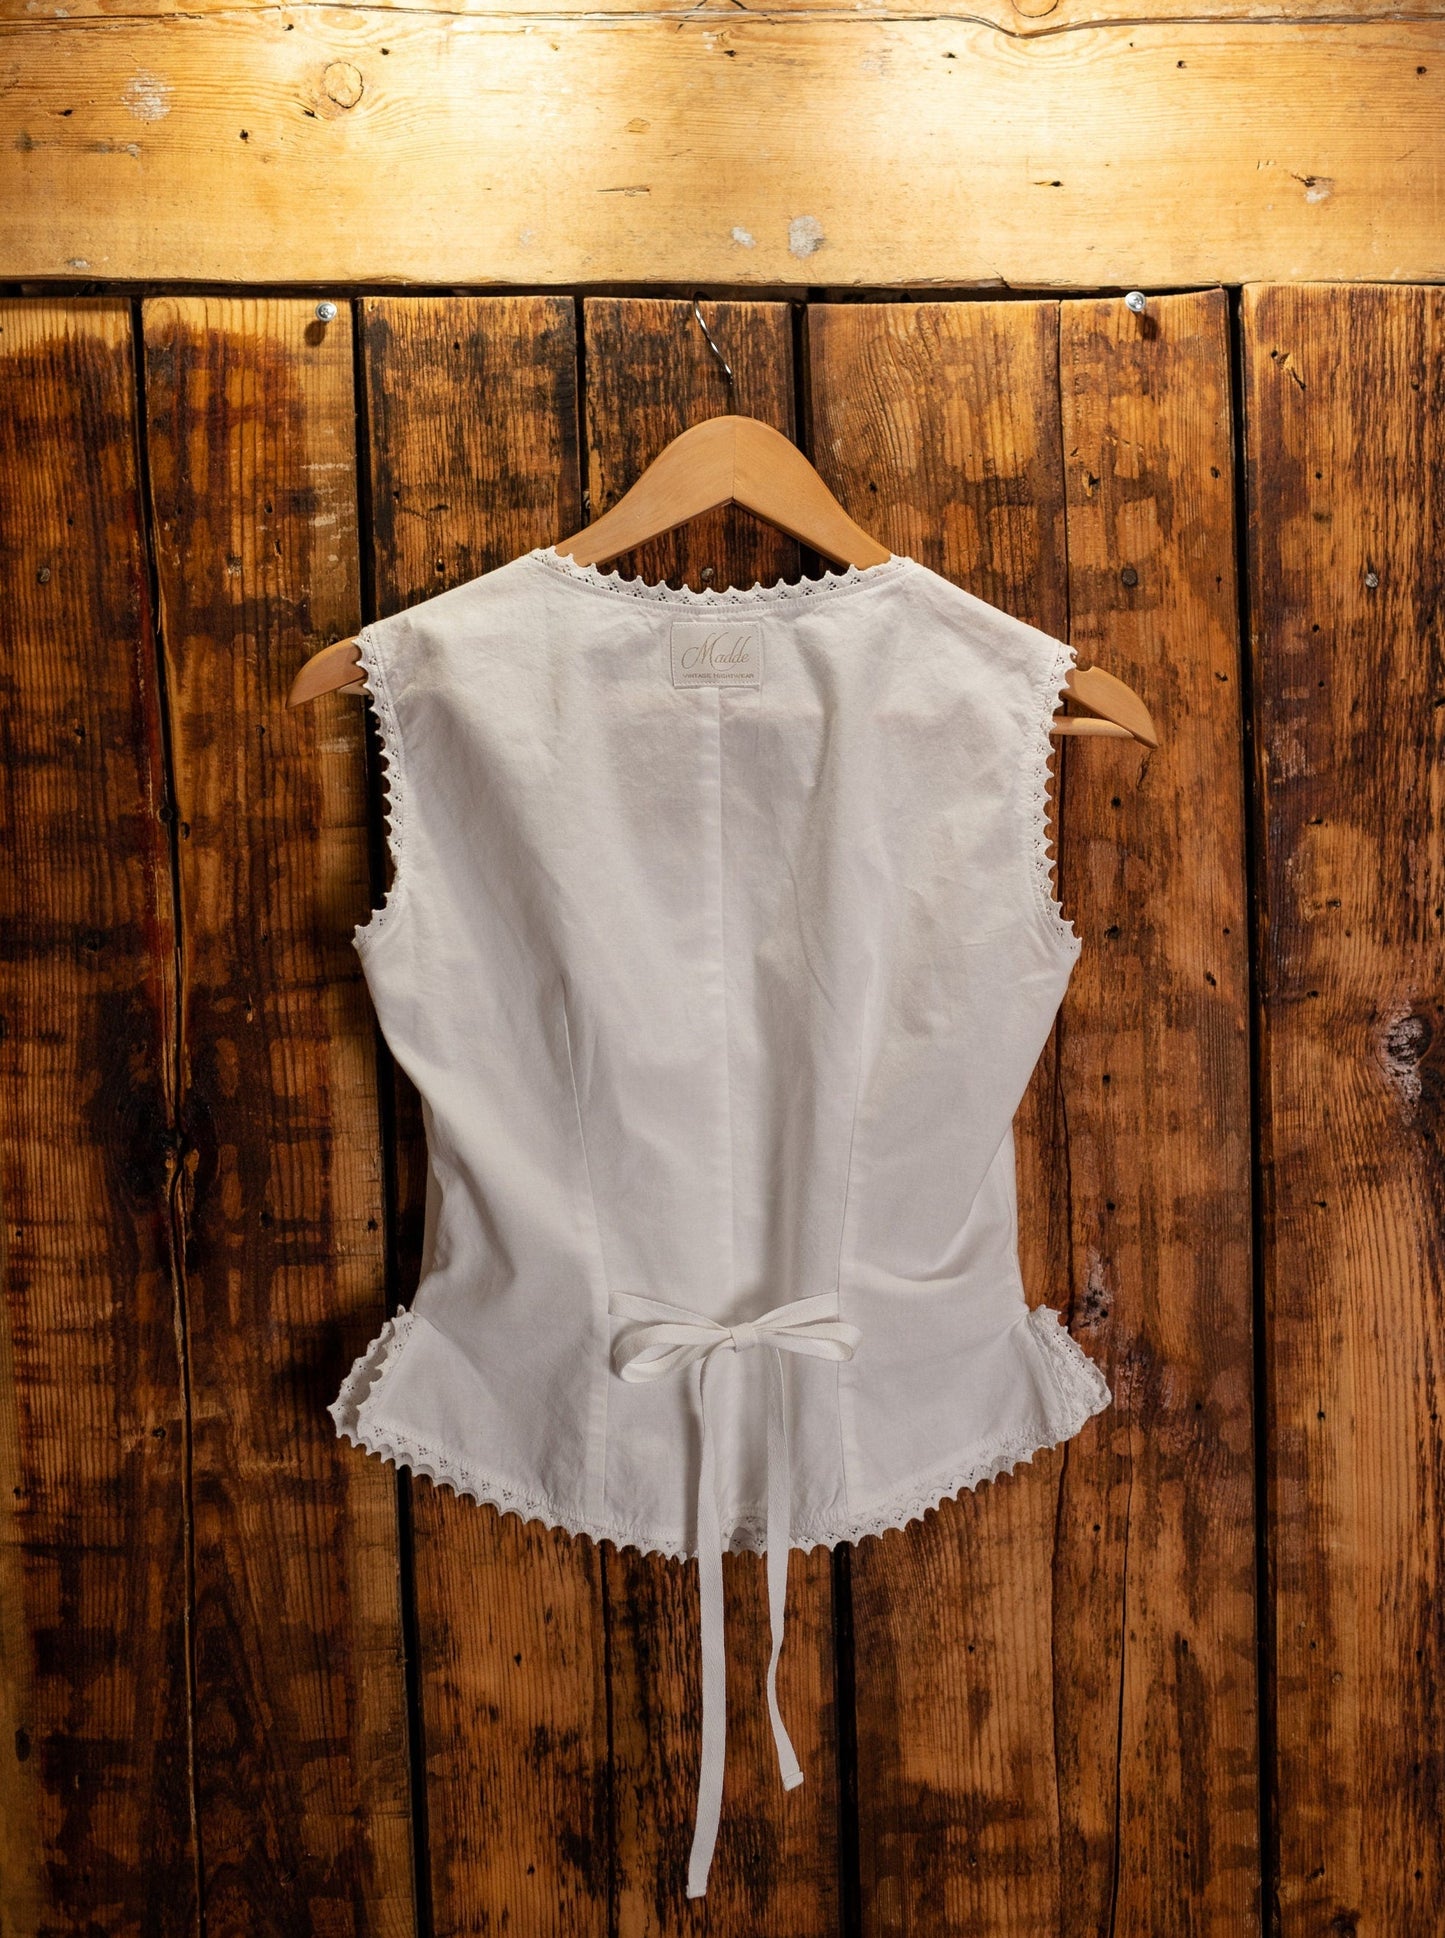 Lady Margaret - Victorian Inspired Pajamas Set in White Cotton